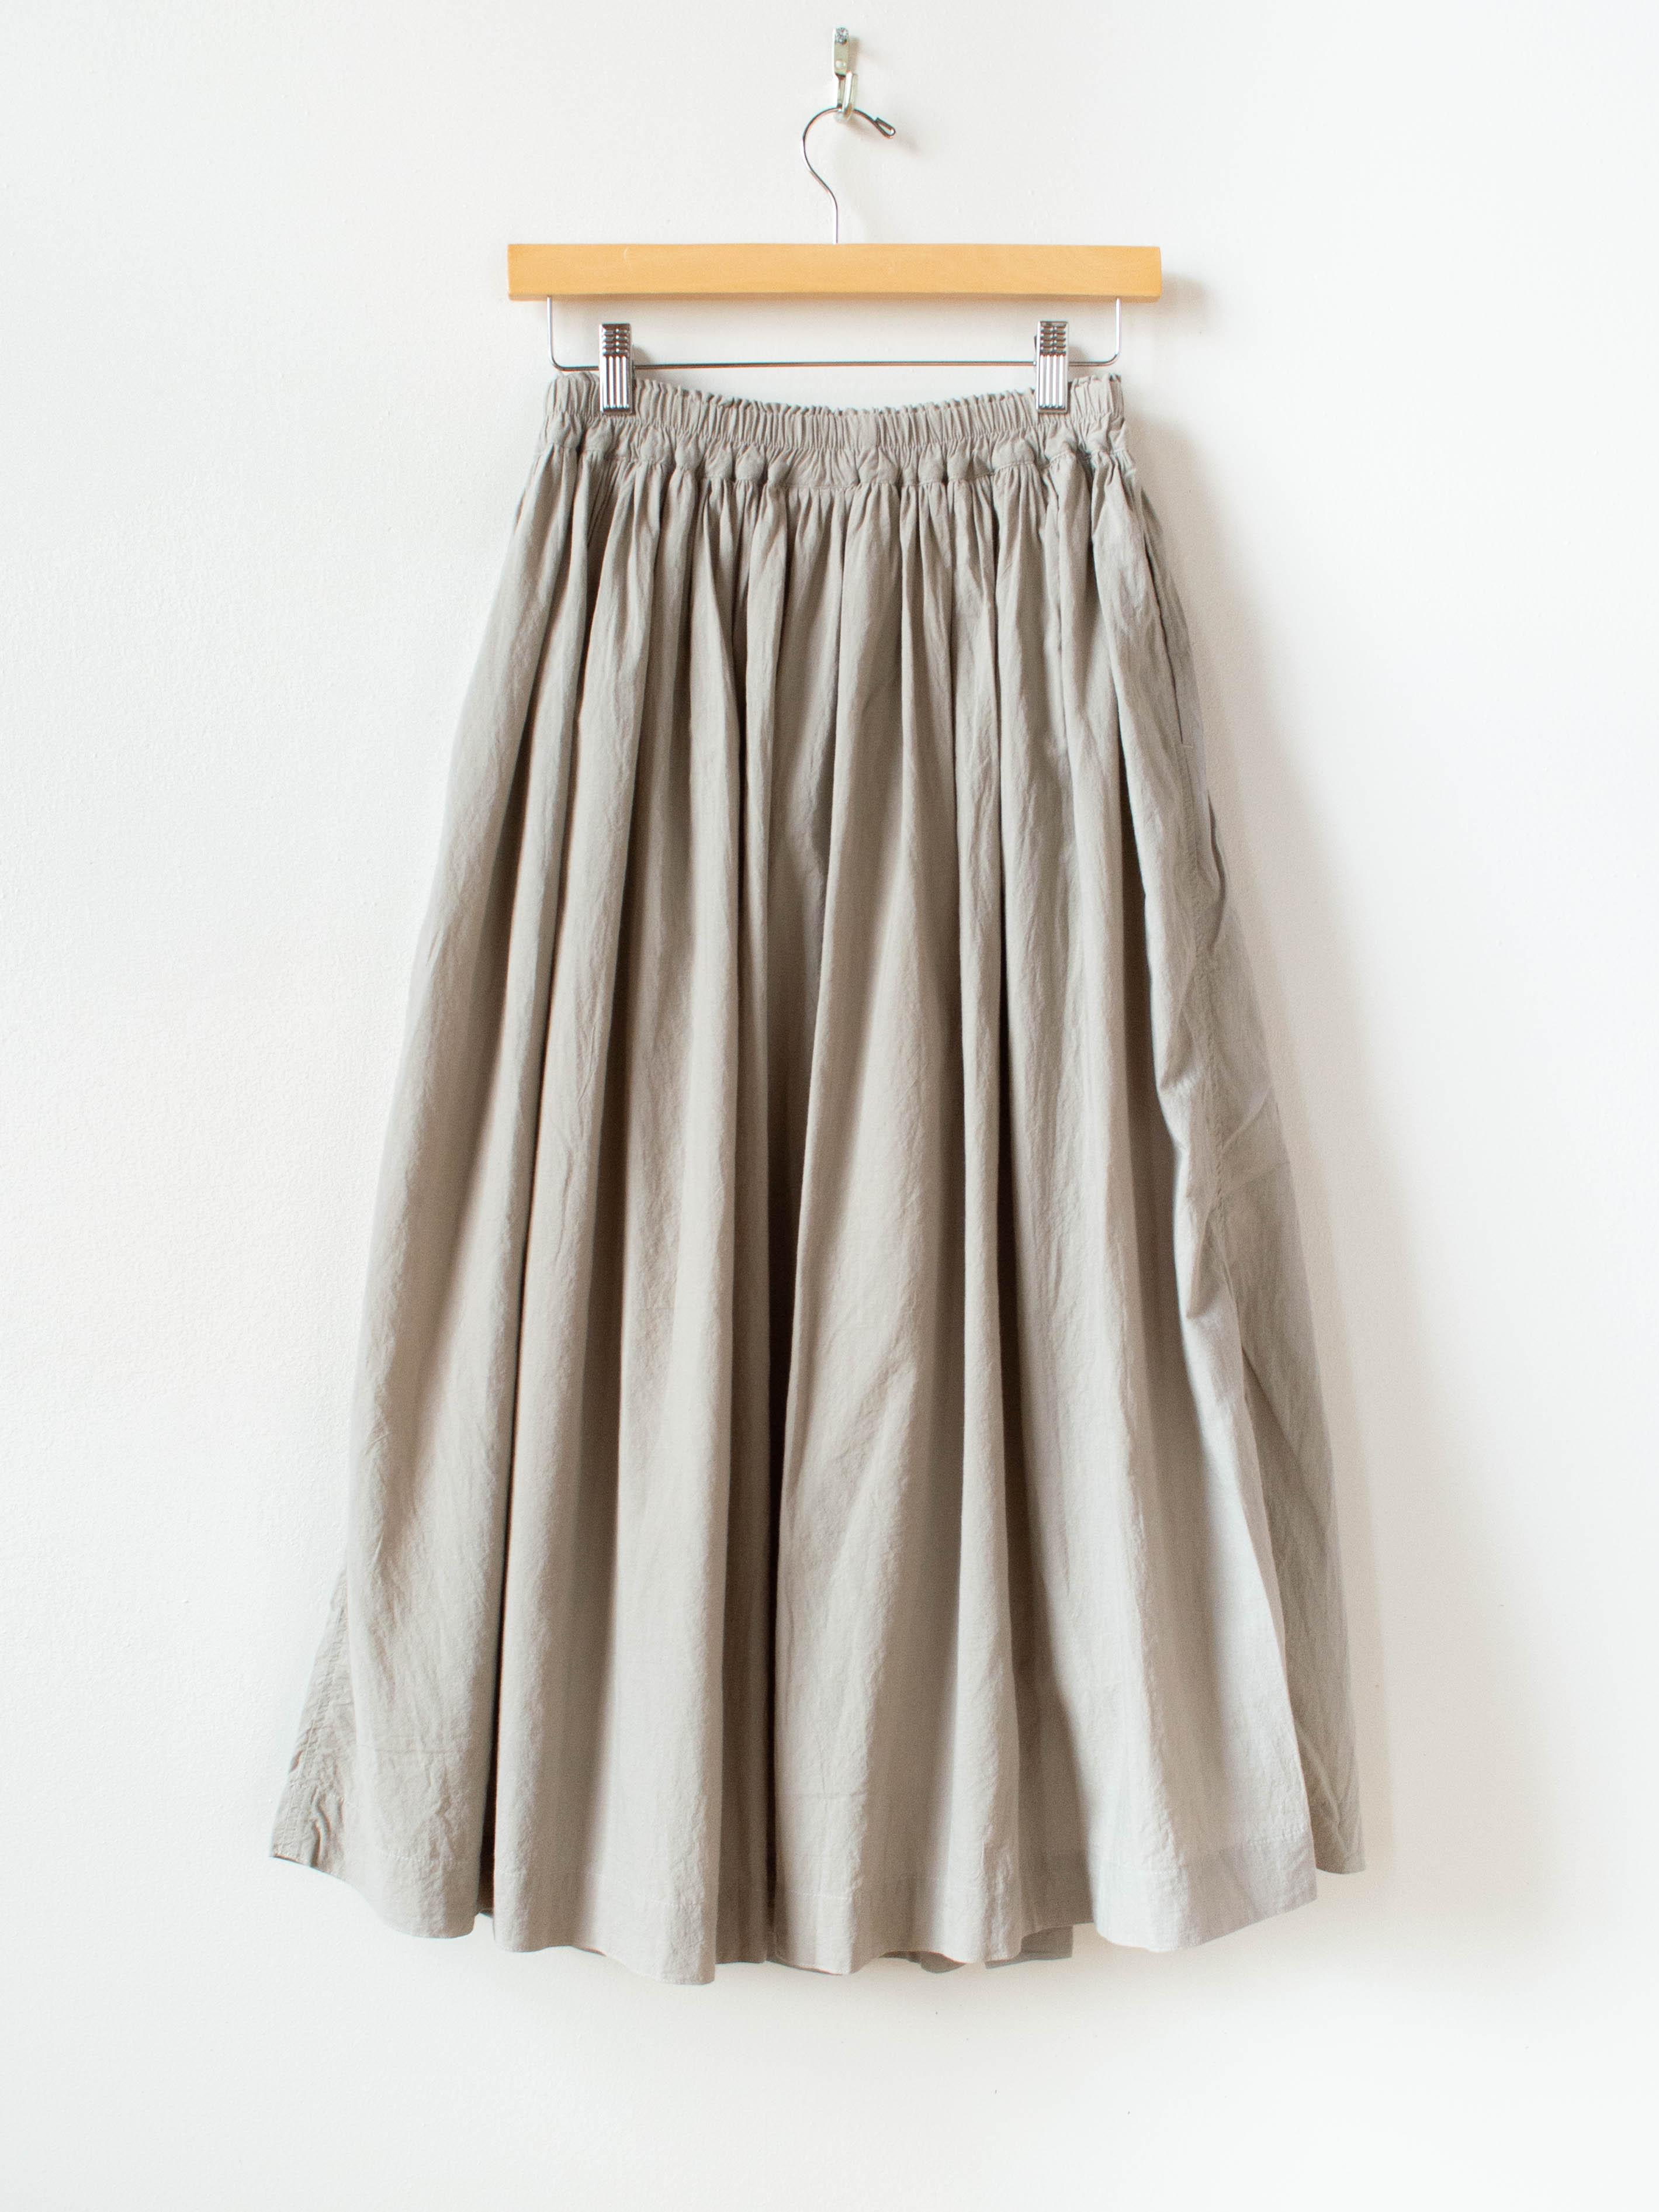 Namu Shop - Ichi Antiquites Azumadaki Drawstring Skirt - Beige